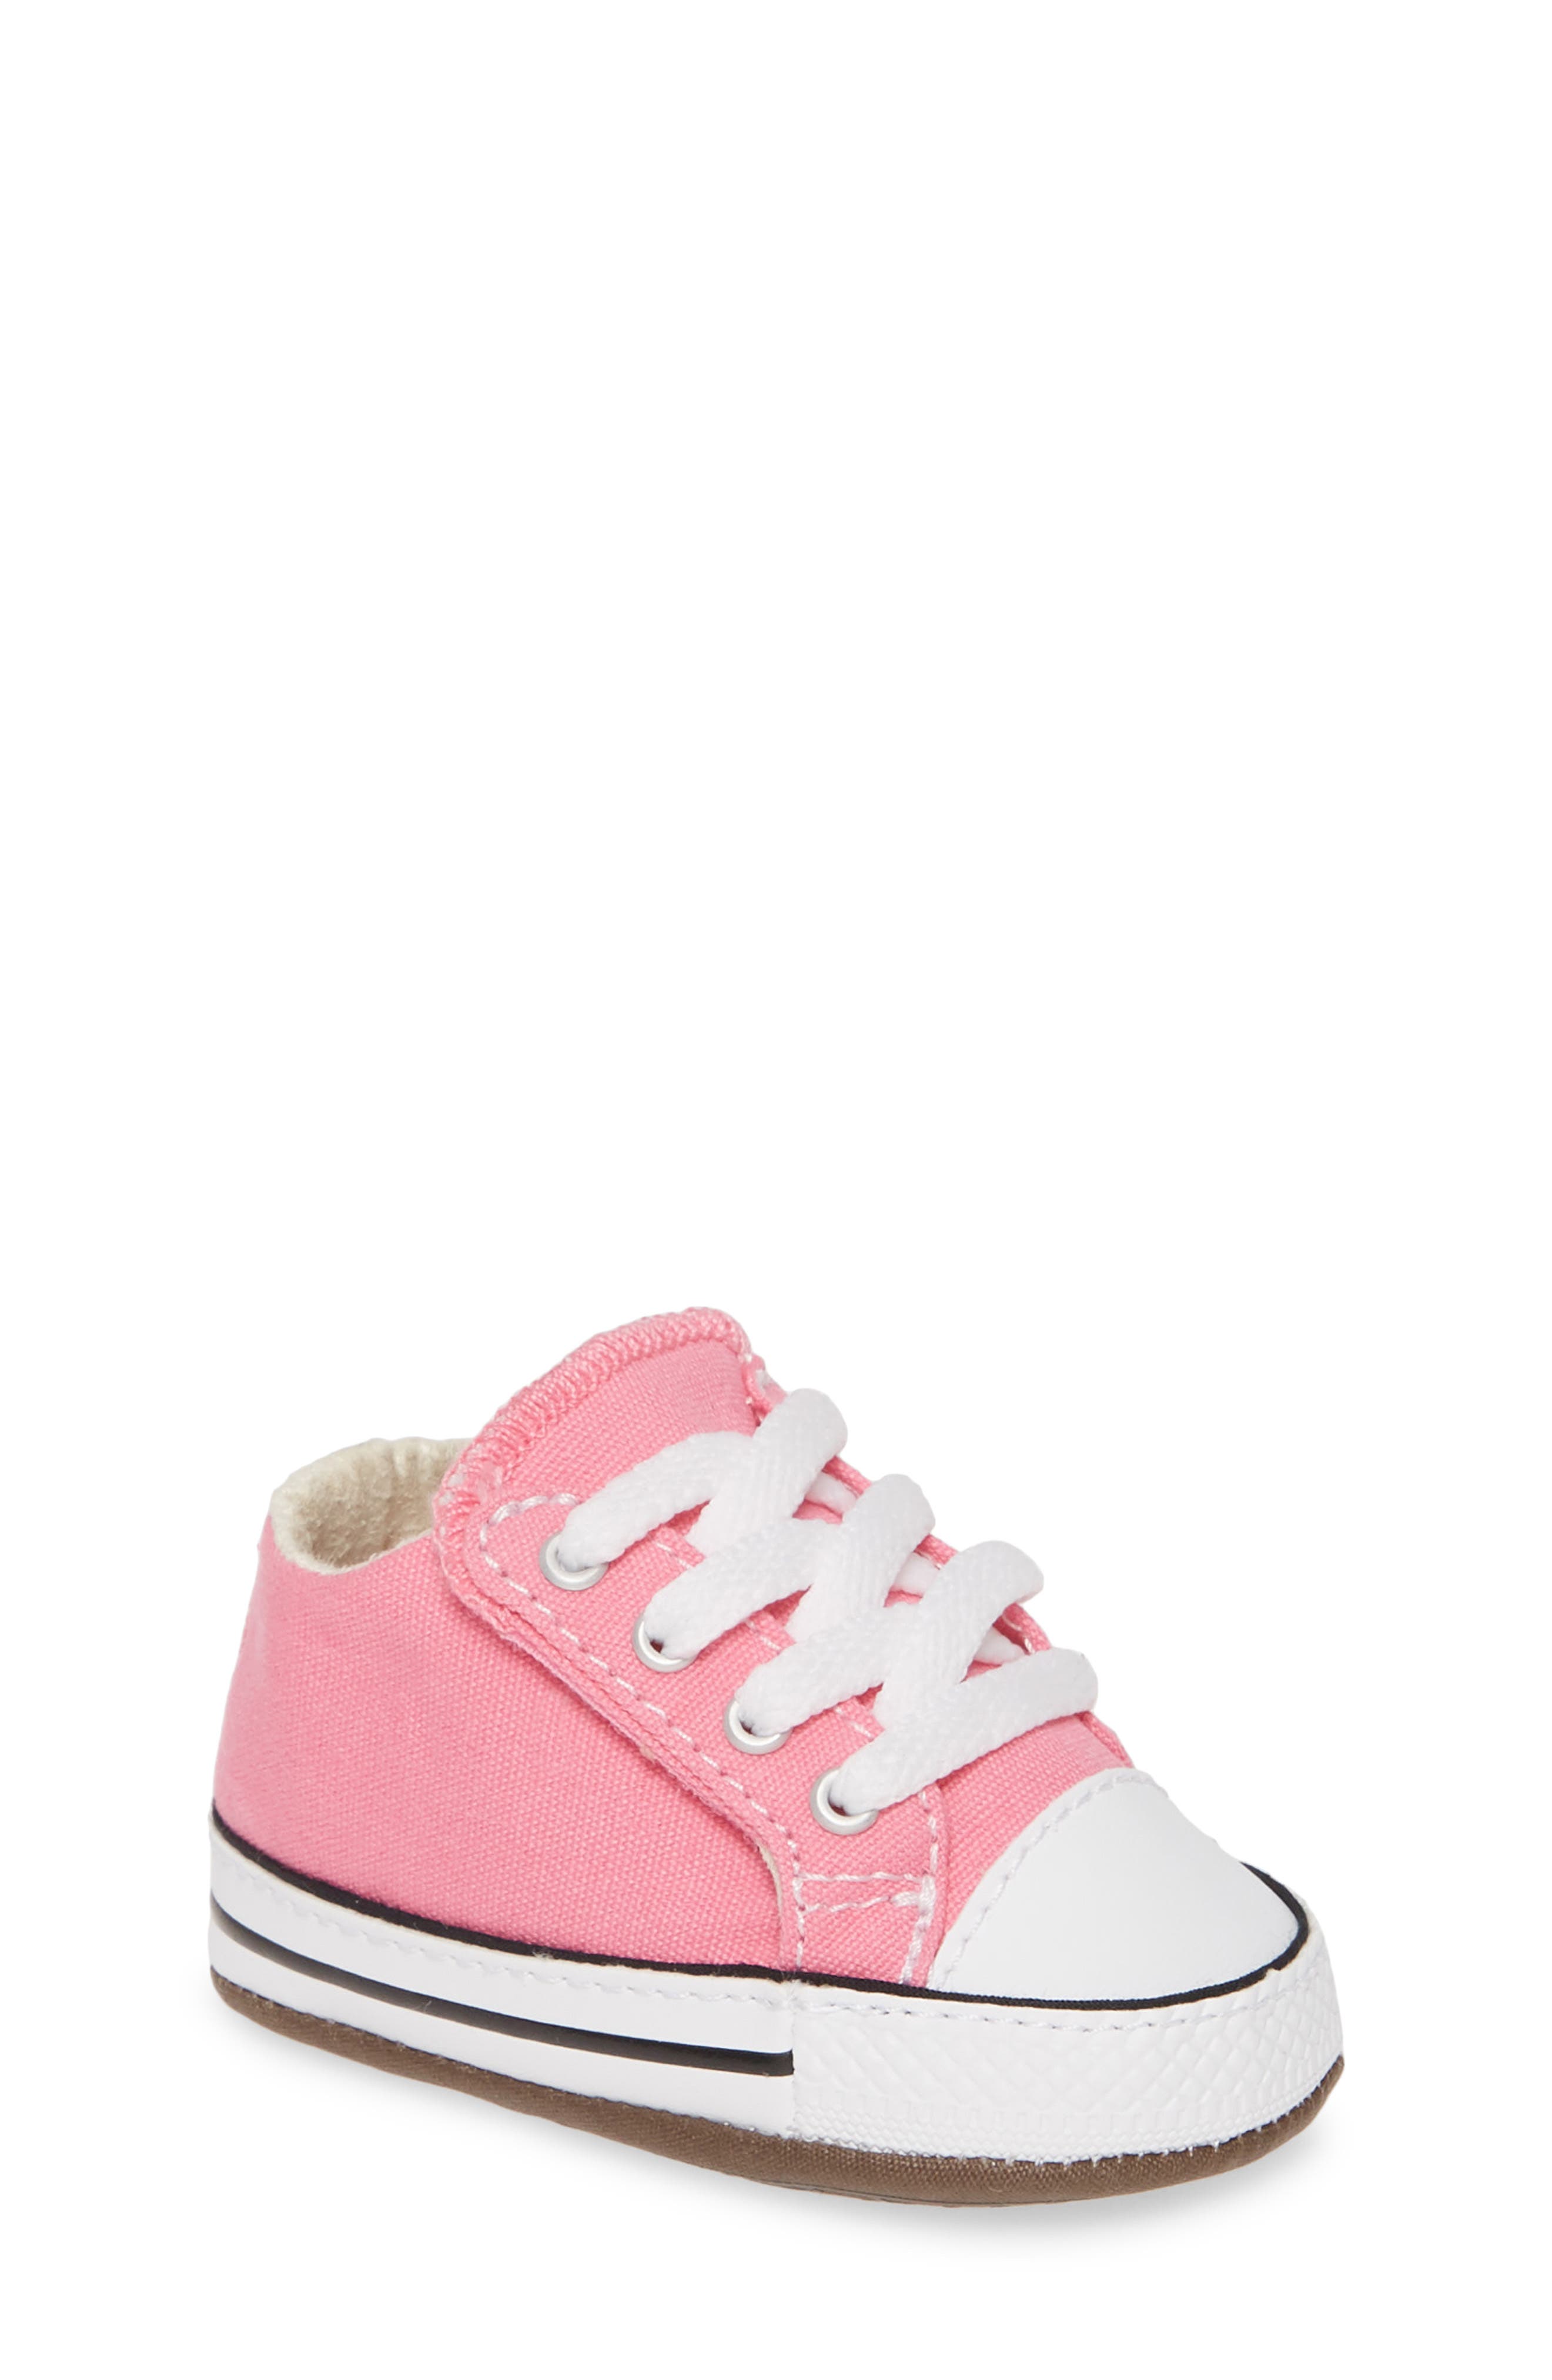 converse crib shoes pink